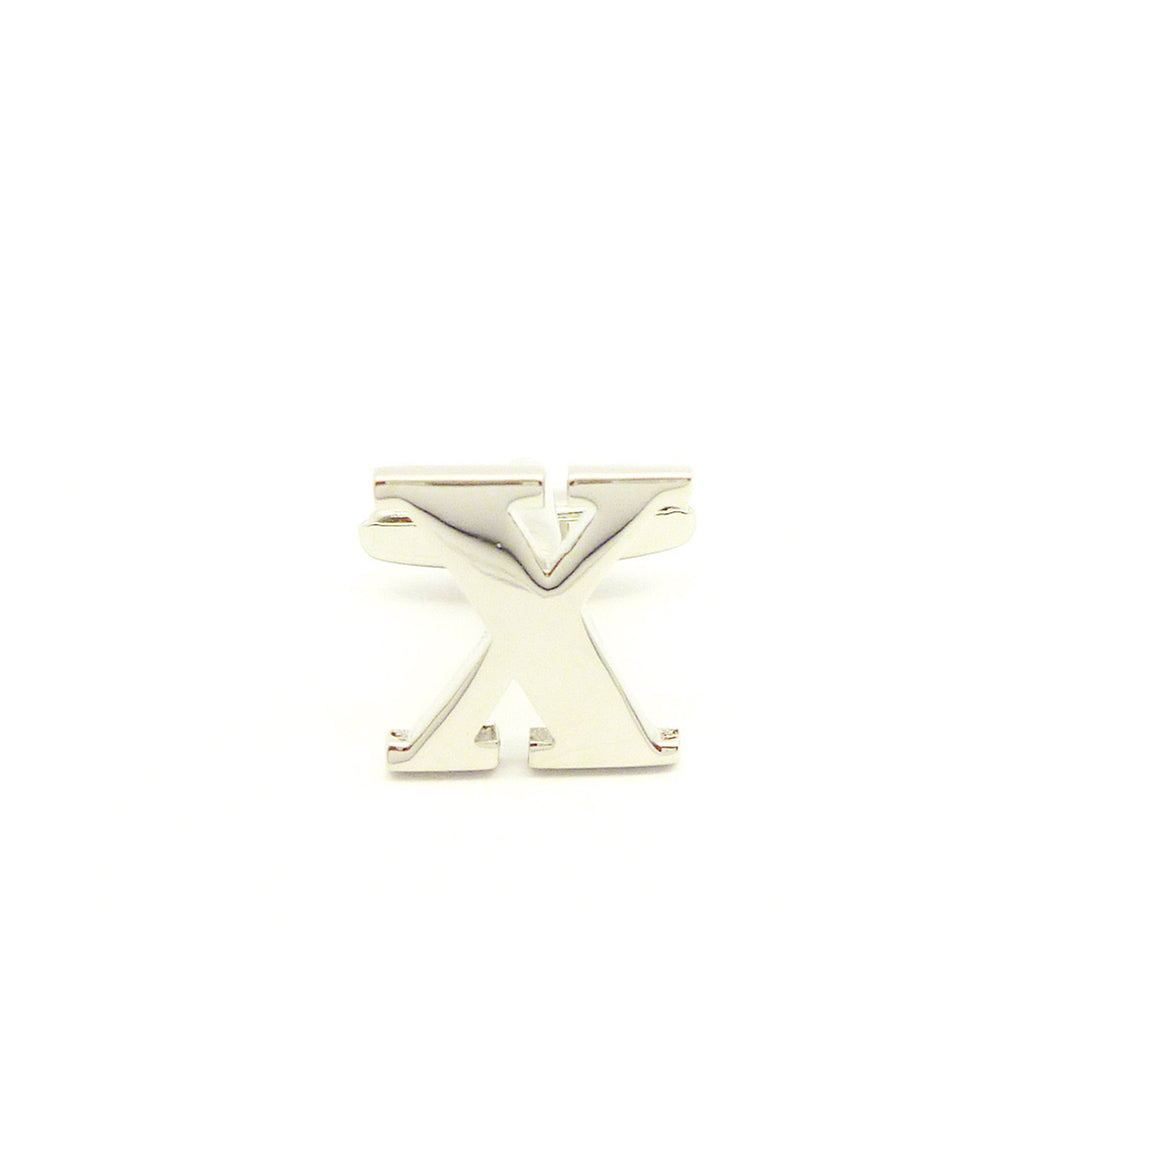 Wild Links - Silver Alphabet Letter "X" Cufflinks